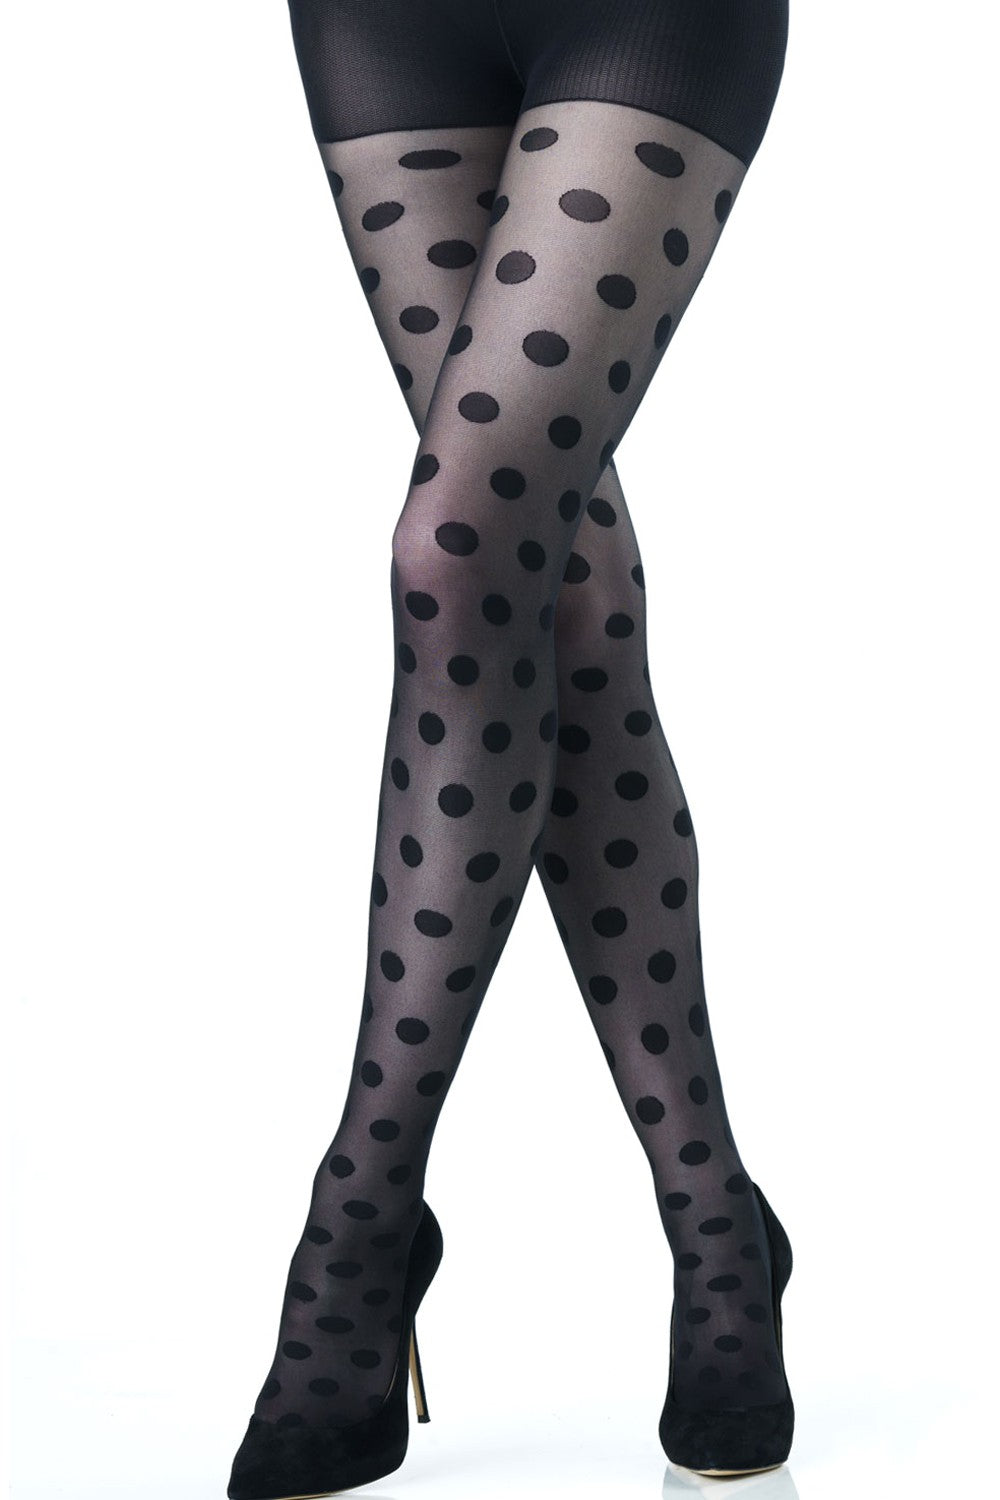 Emilio Cavallini Polka Dots Tights - Sheer black tights with spot pattern 